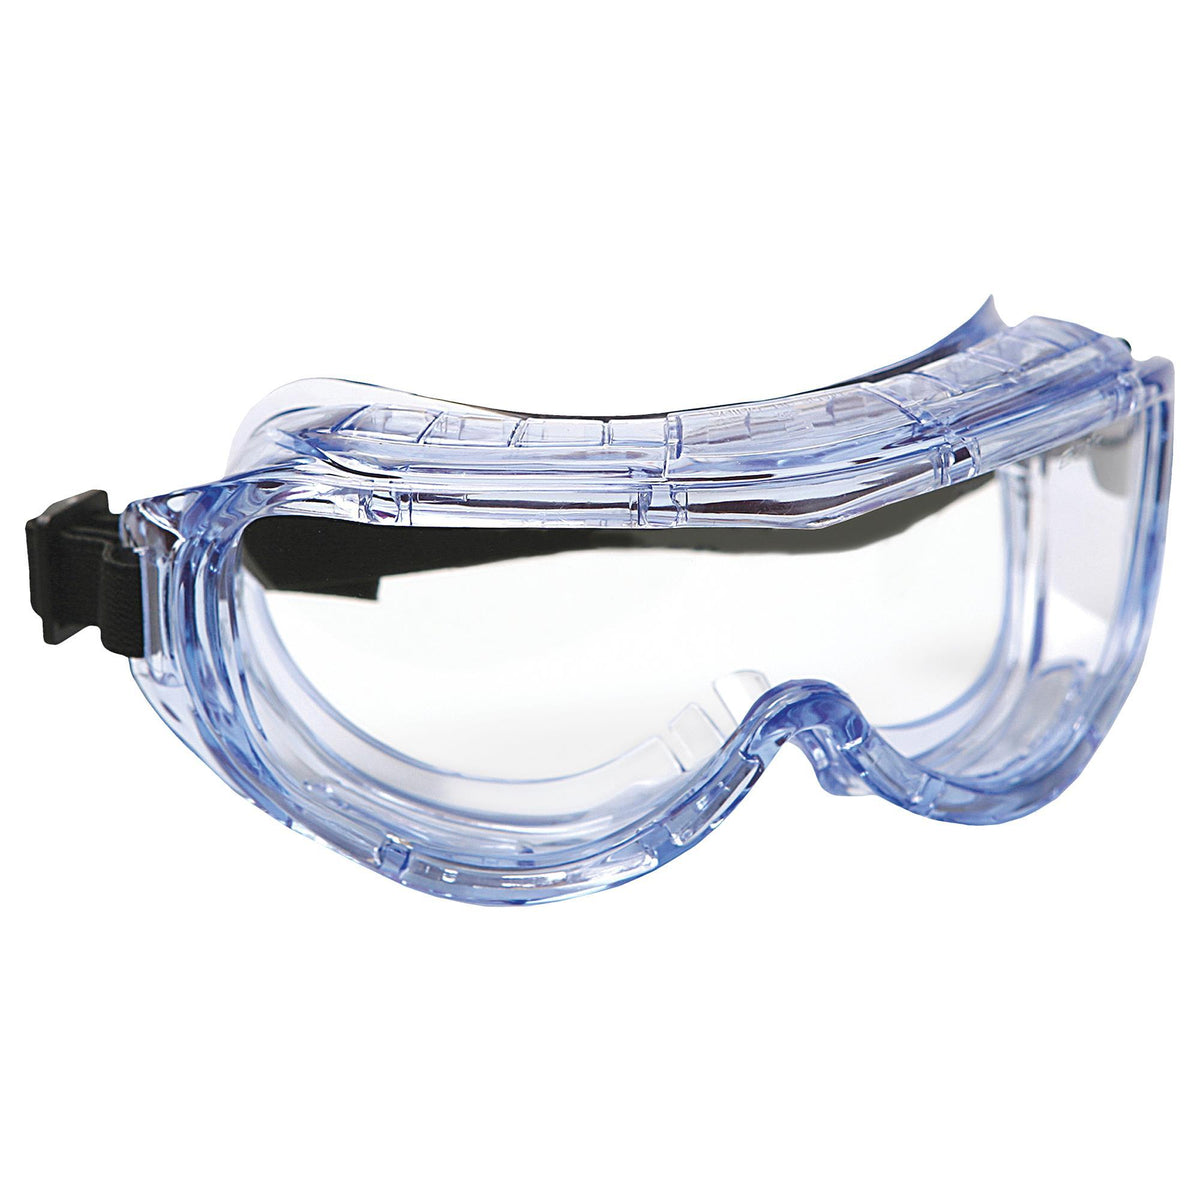 Wide View Splash Protection Goggle 5pcs - W-WEL15119CL